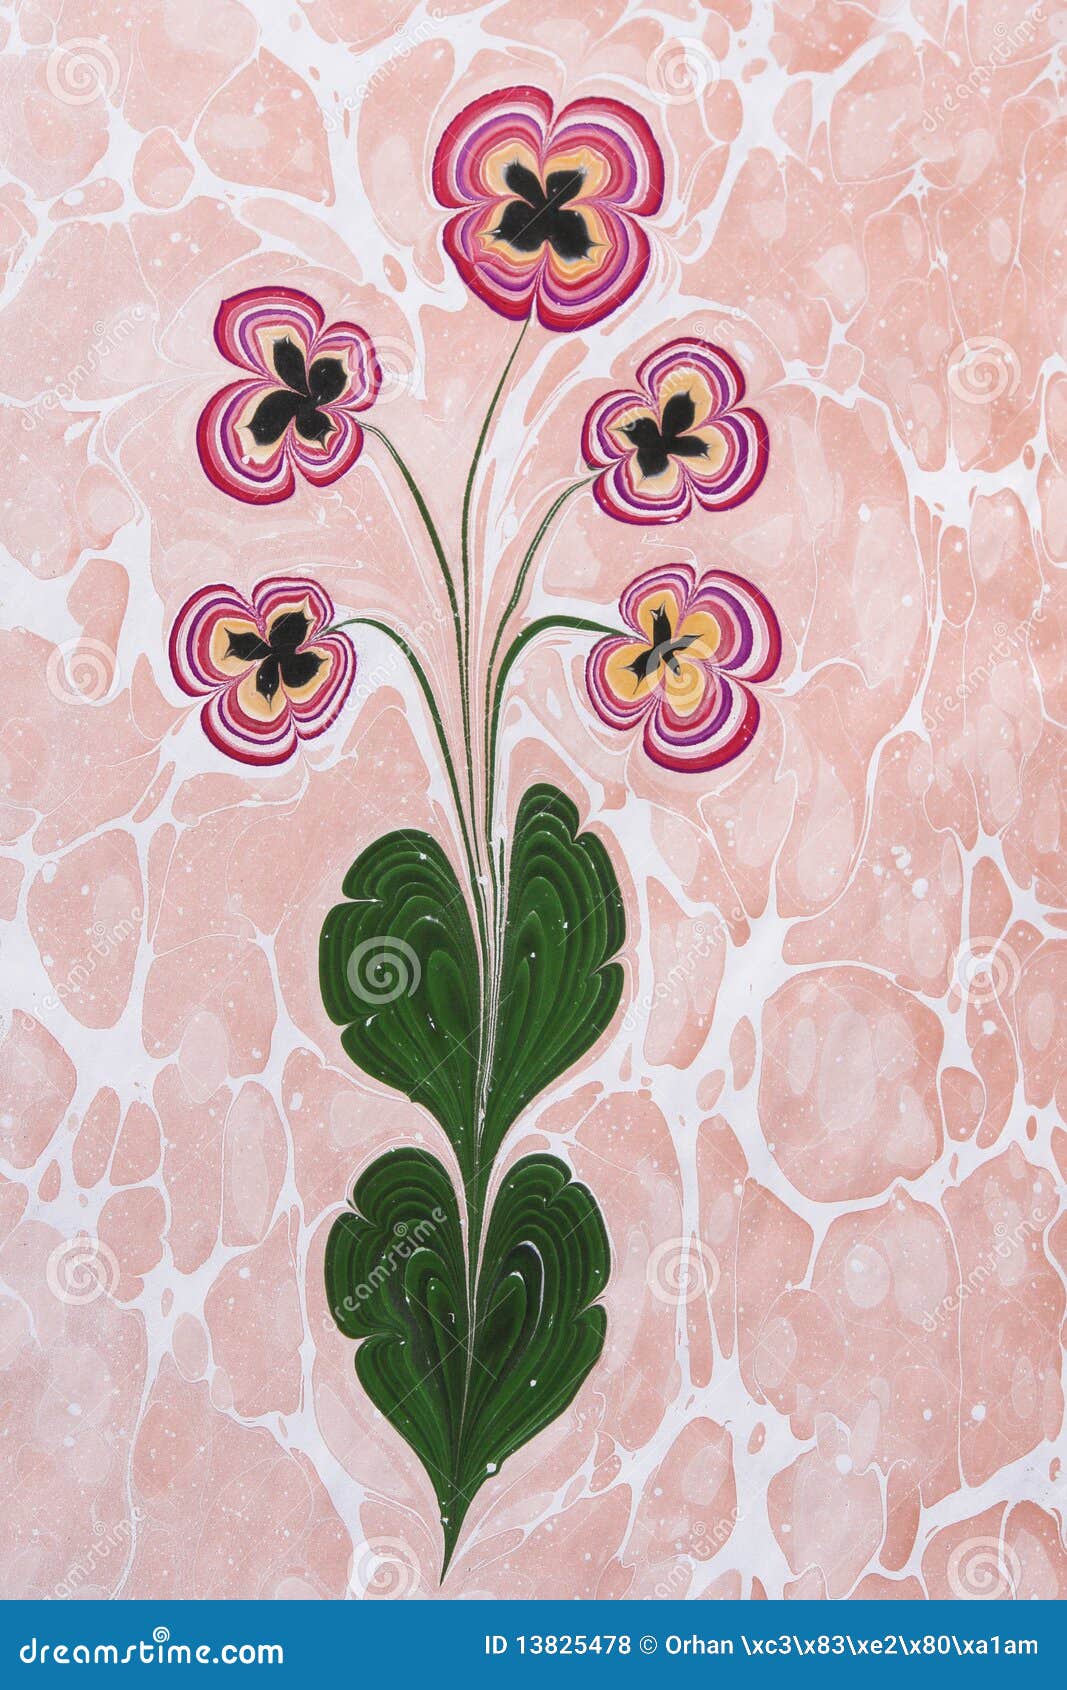 turkish marbled paper artwork background